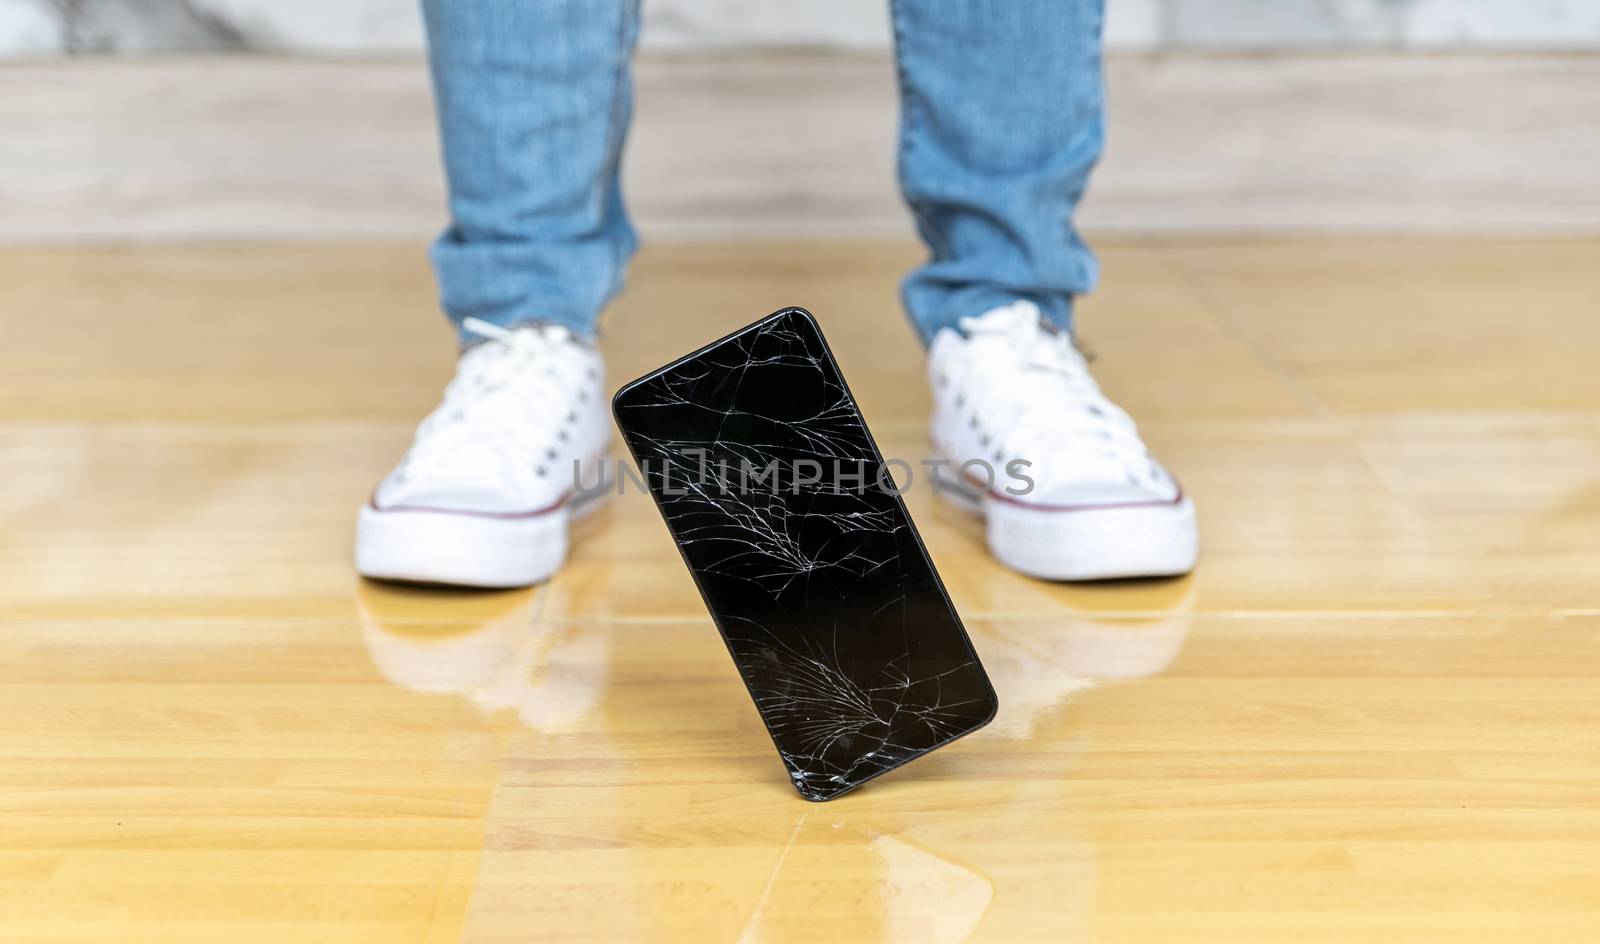 People fall smartphone on the floor broken screen by sompongtom